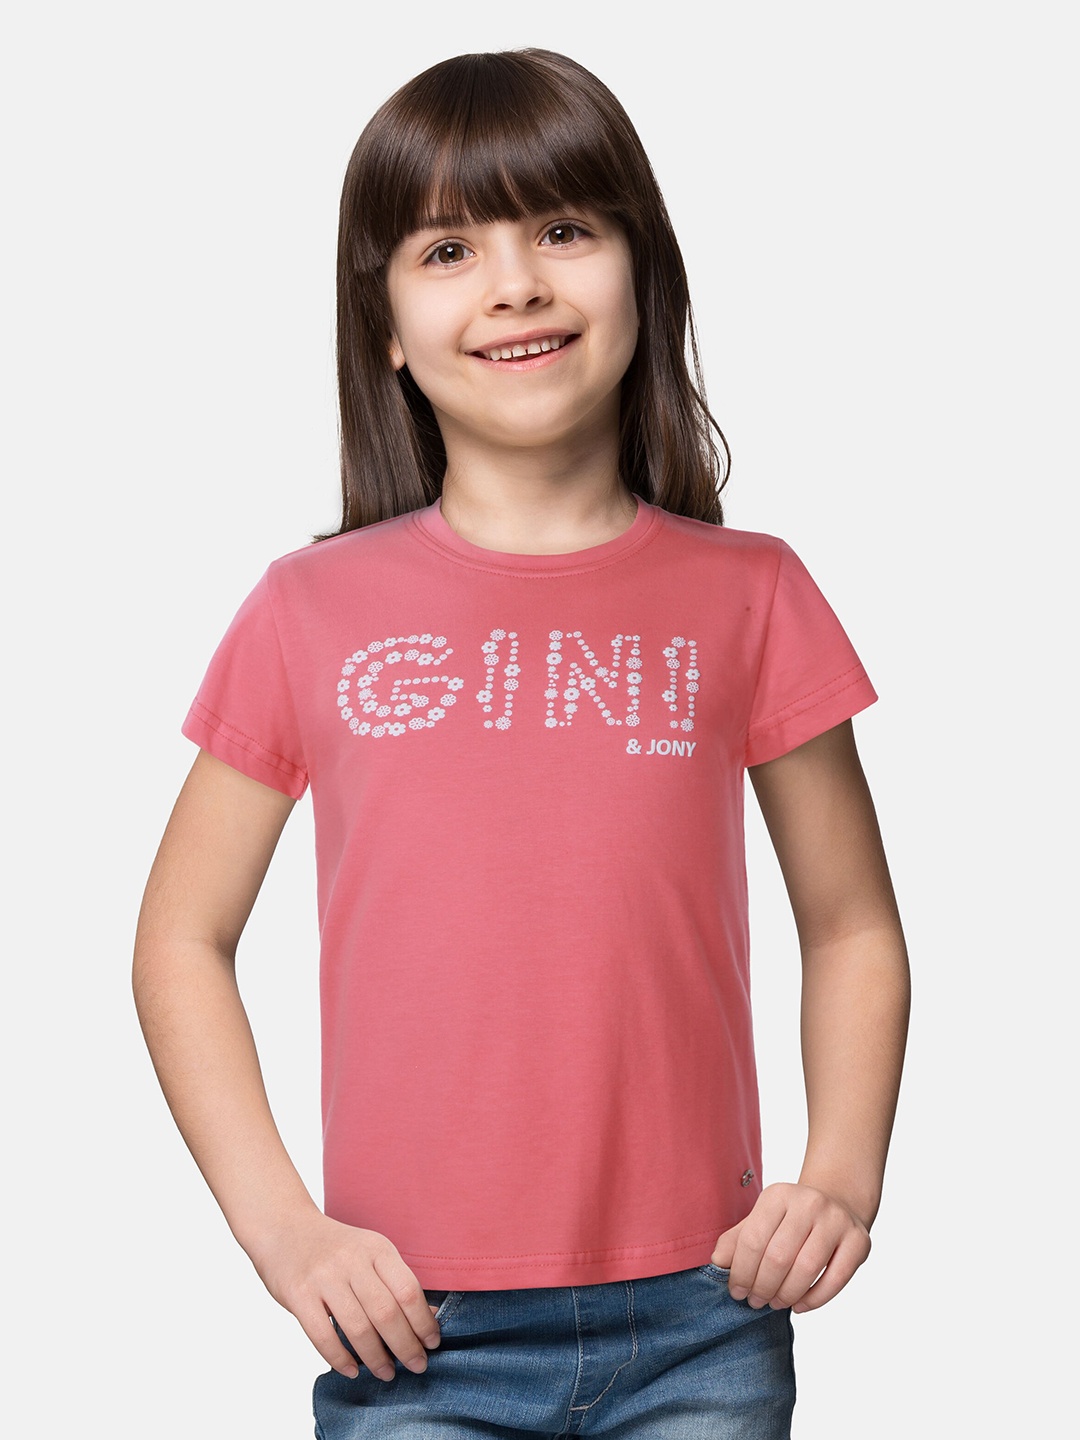 

Gini and Jony Girls Typography Printed Cotton T-Shirt, Pink